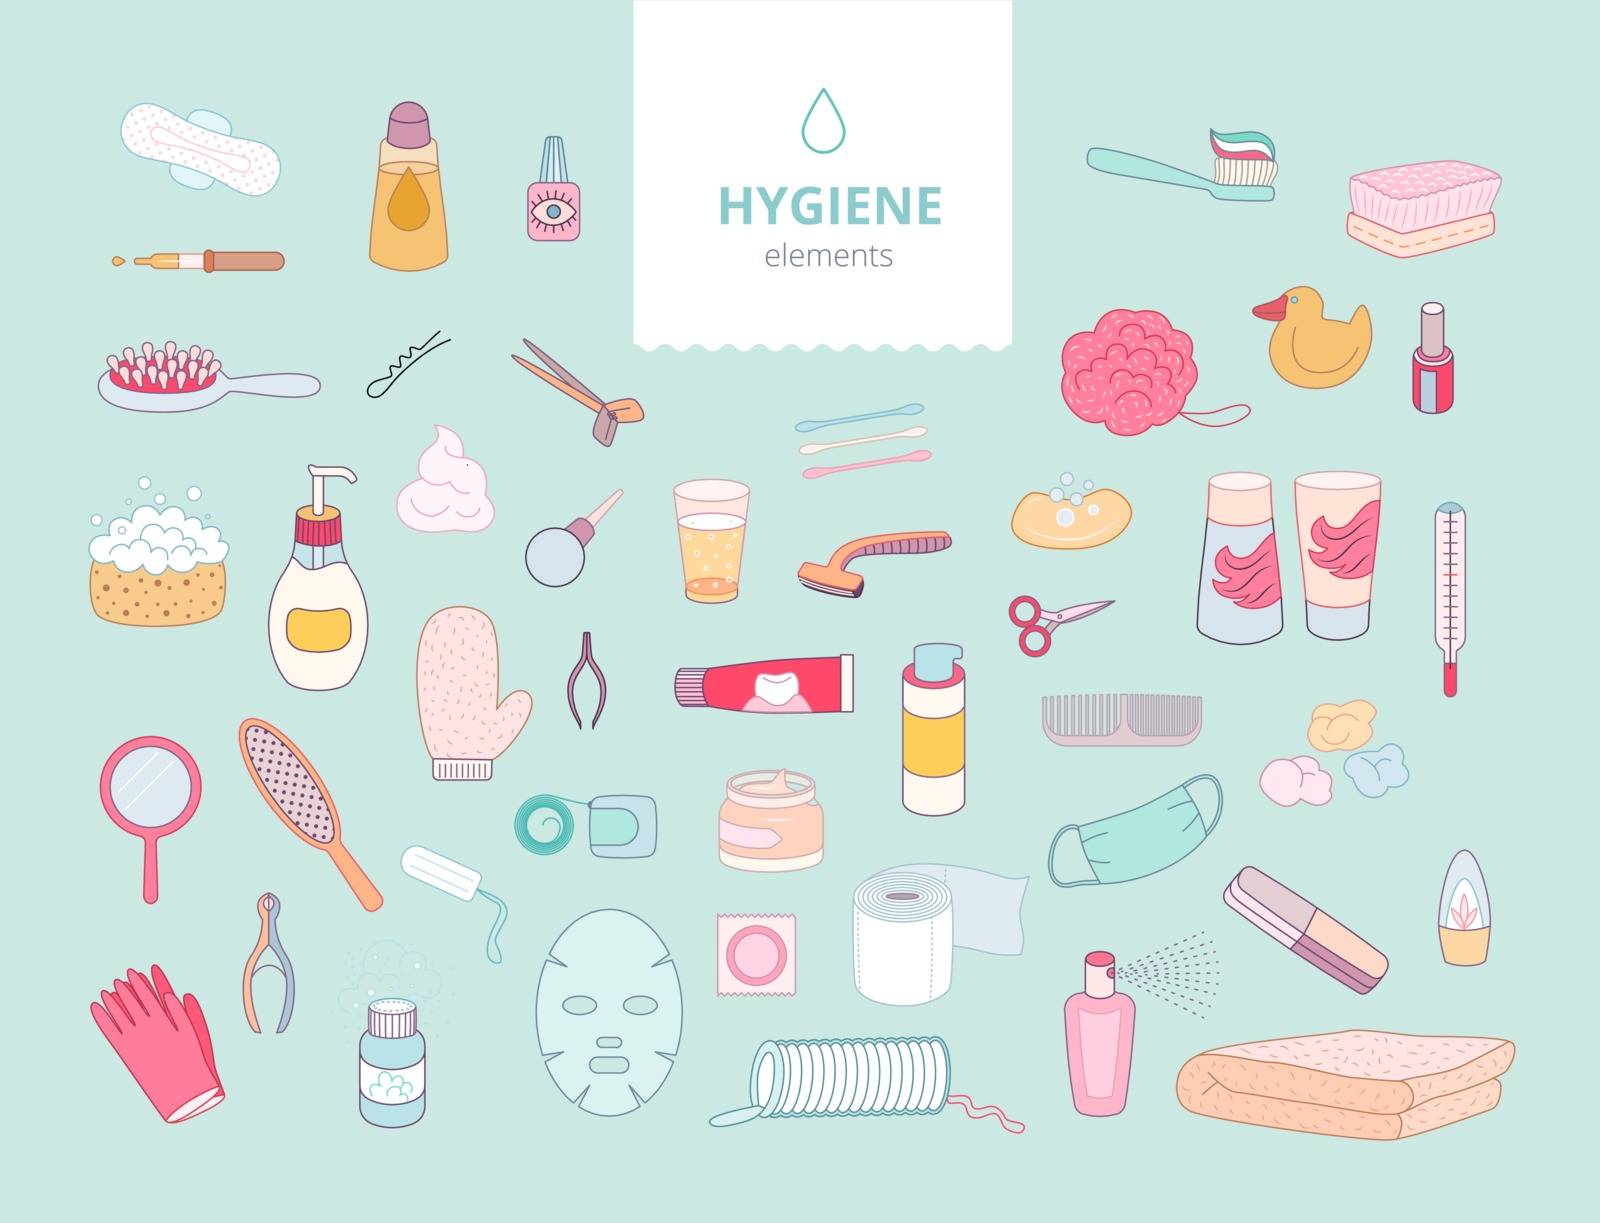 The set of hygiene elements on green background, flat cartoon vector illustration